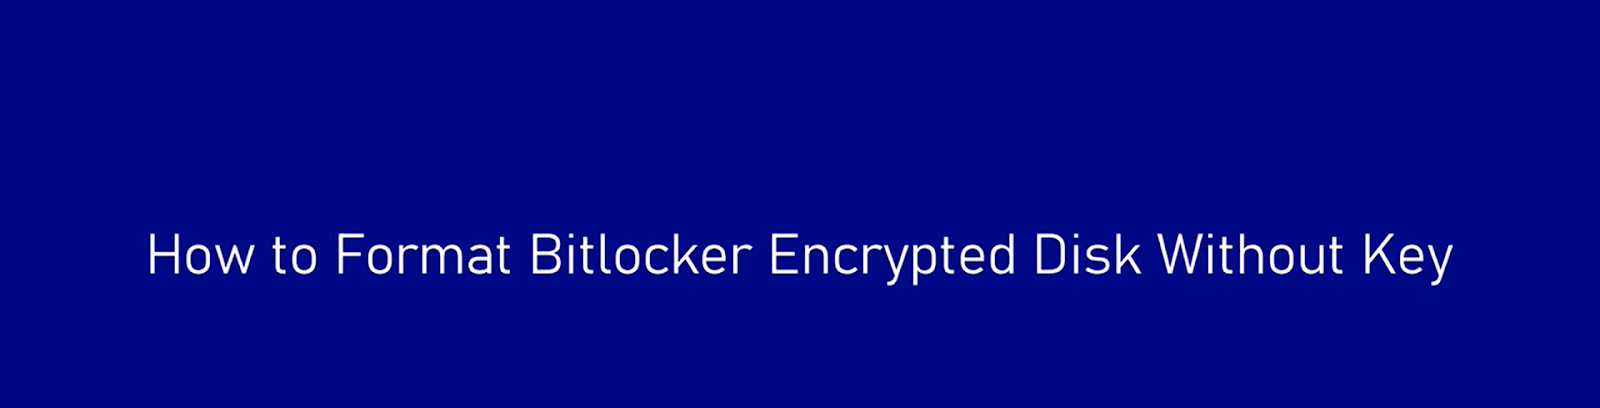 Formatting BitLocker Encrypted Drive without Password/Key